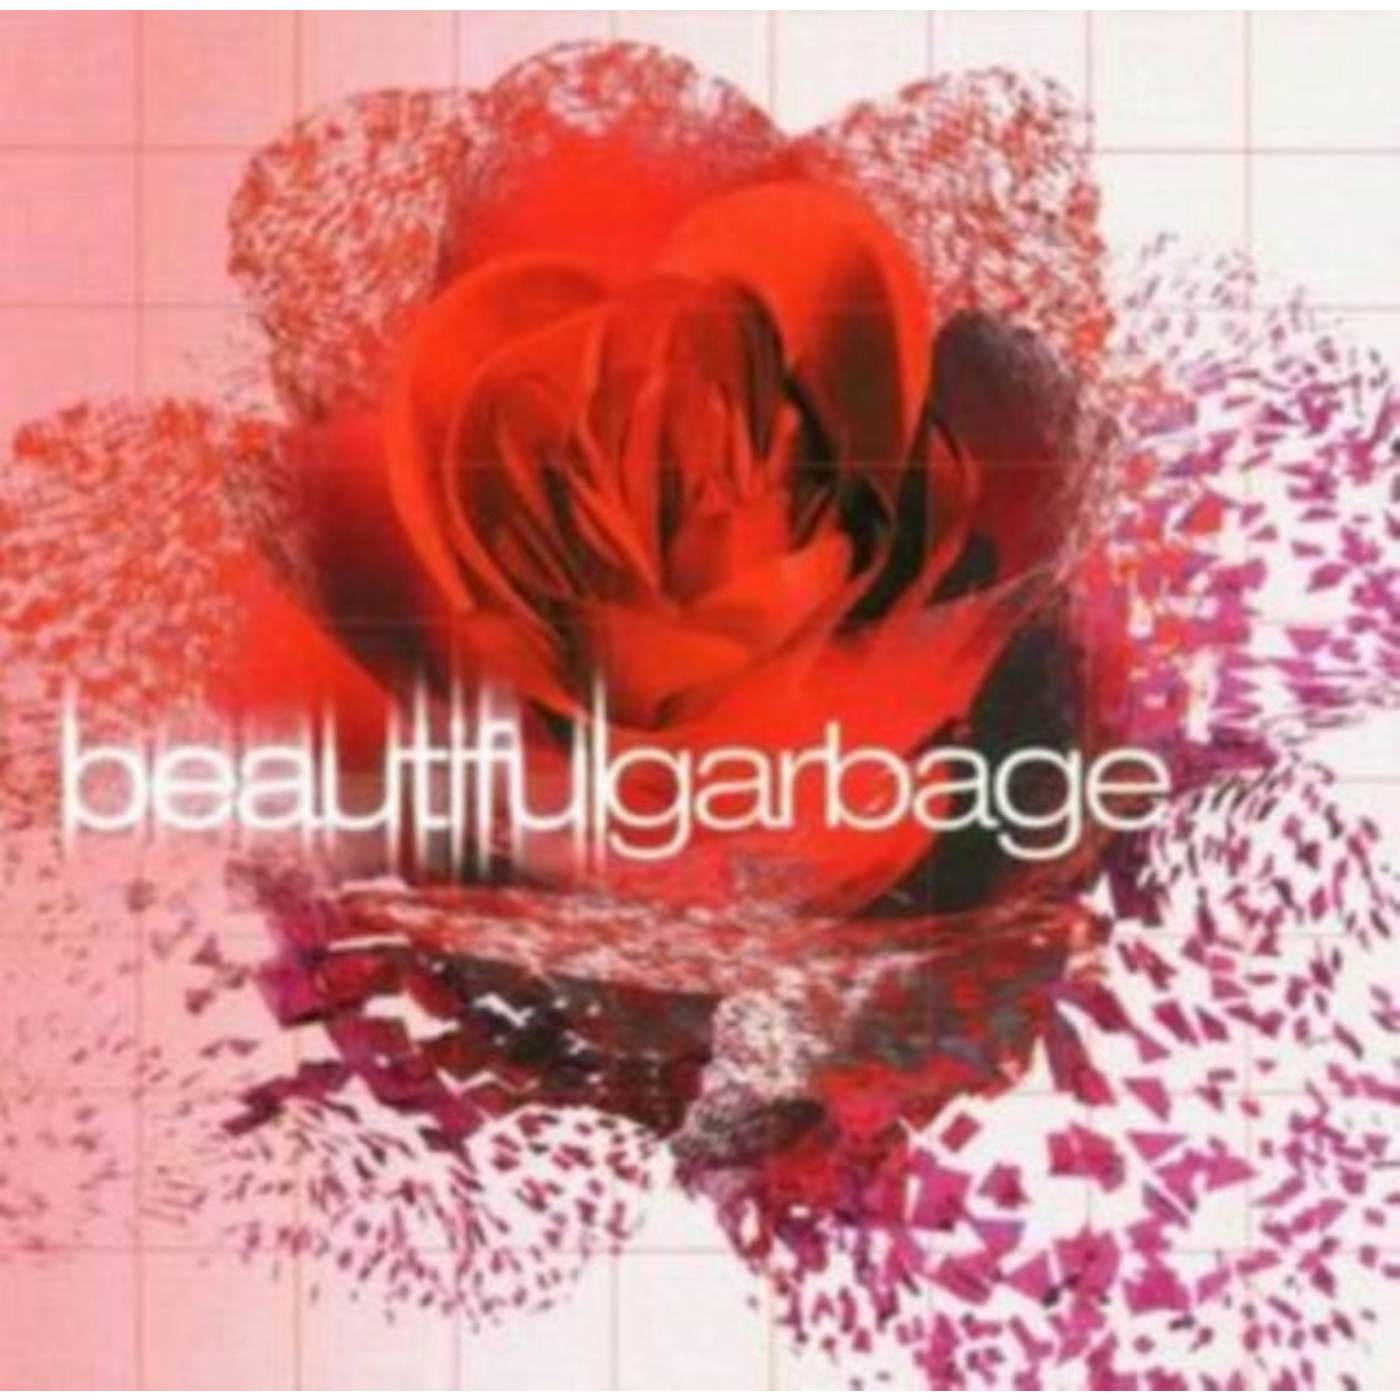 Garbage LP Vinyl Record - Beautiful Garbage (20. 21 Remaster) (Coloured Vinyl)